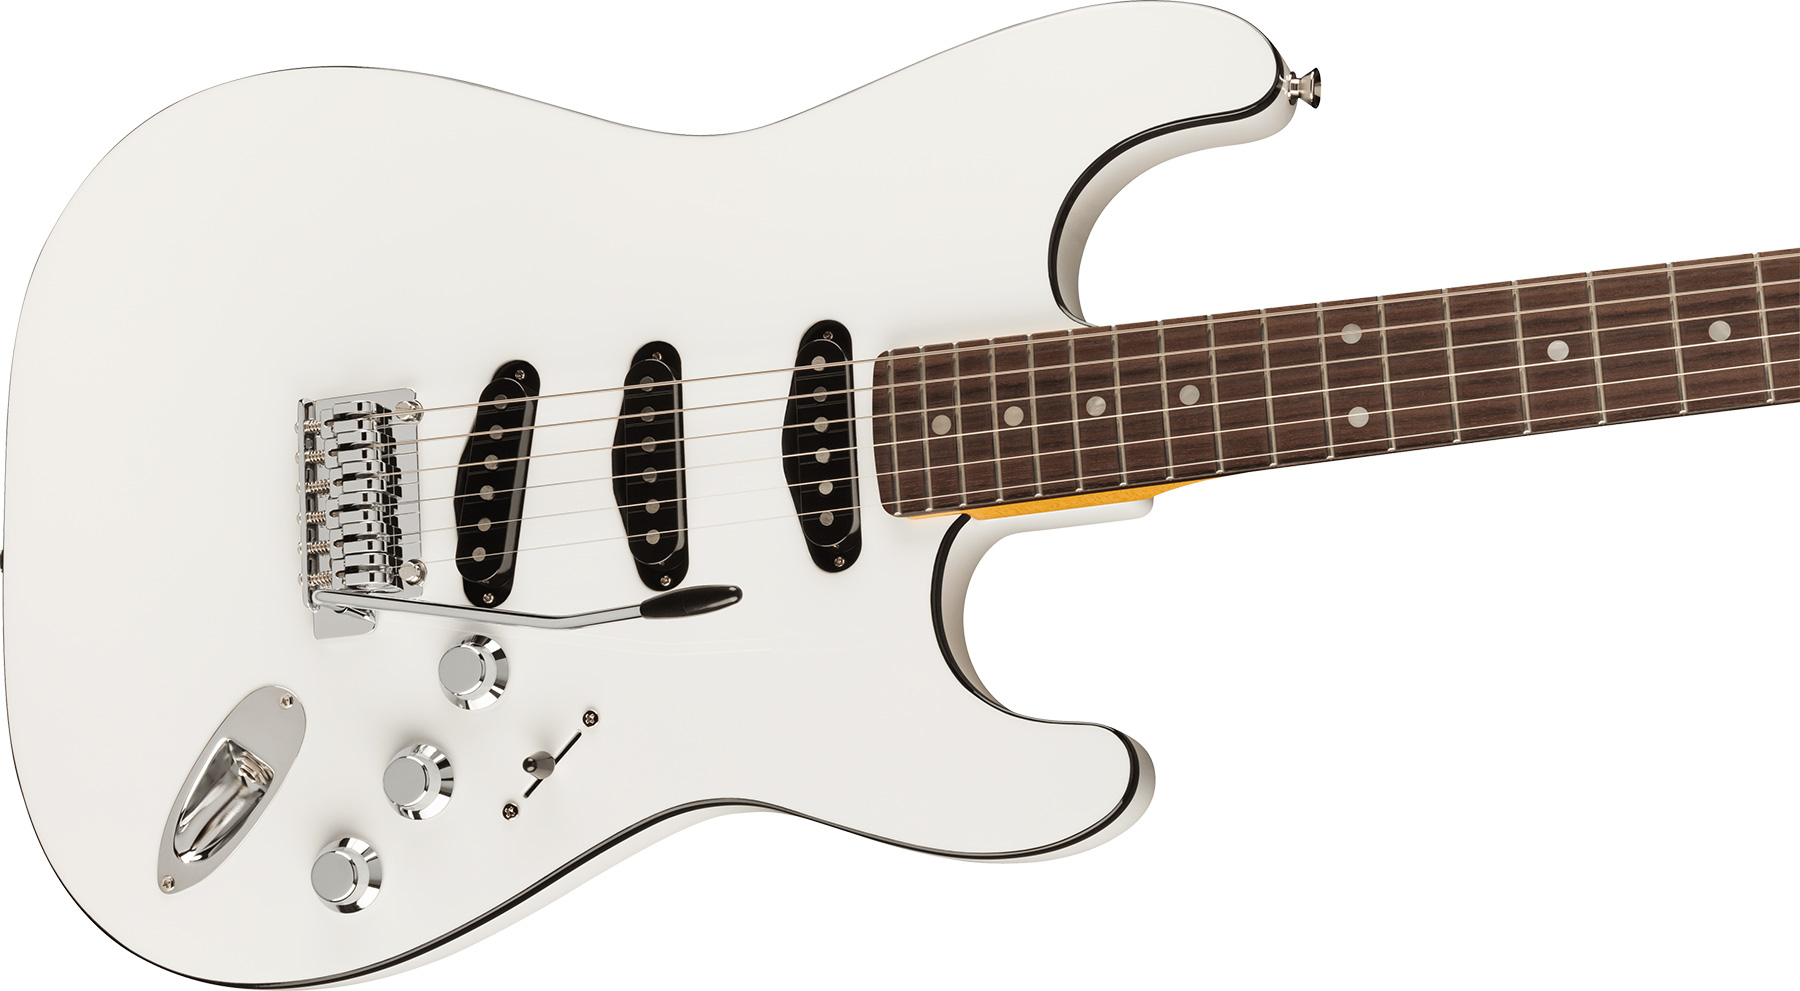 Fender Strat Aerodyne Special Jap 3s Trem Rw - Bright White - Str shape electric guitar - Variation 2